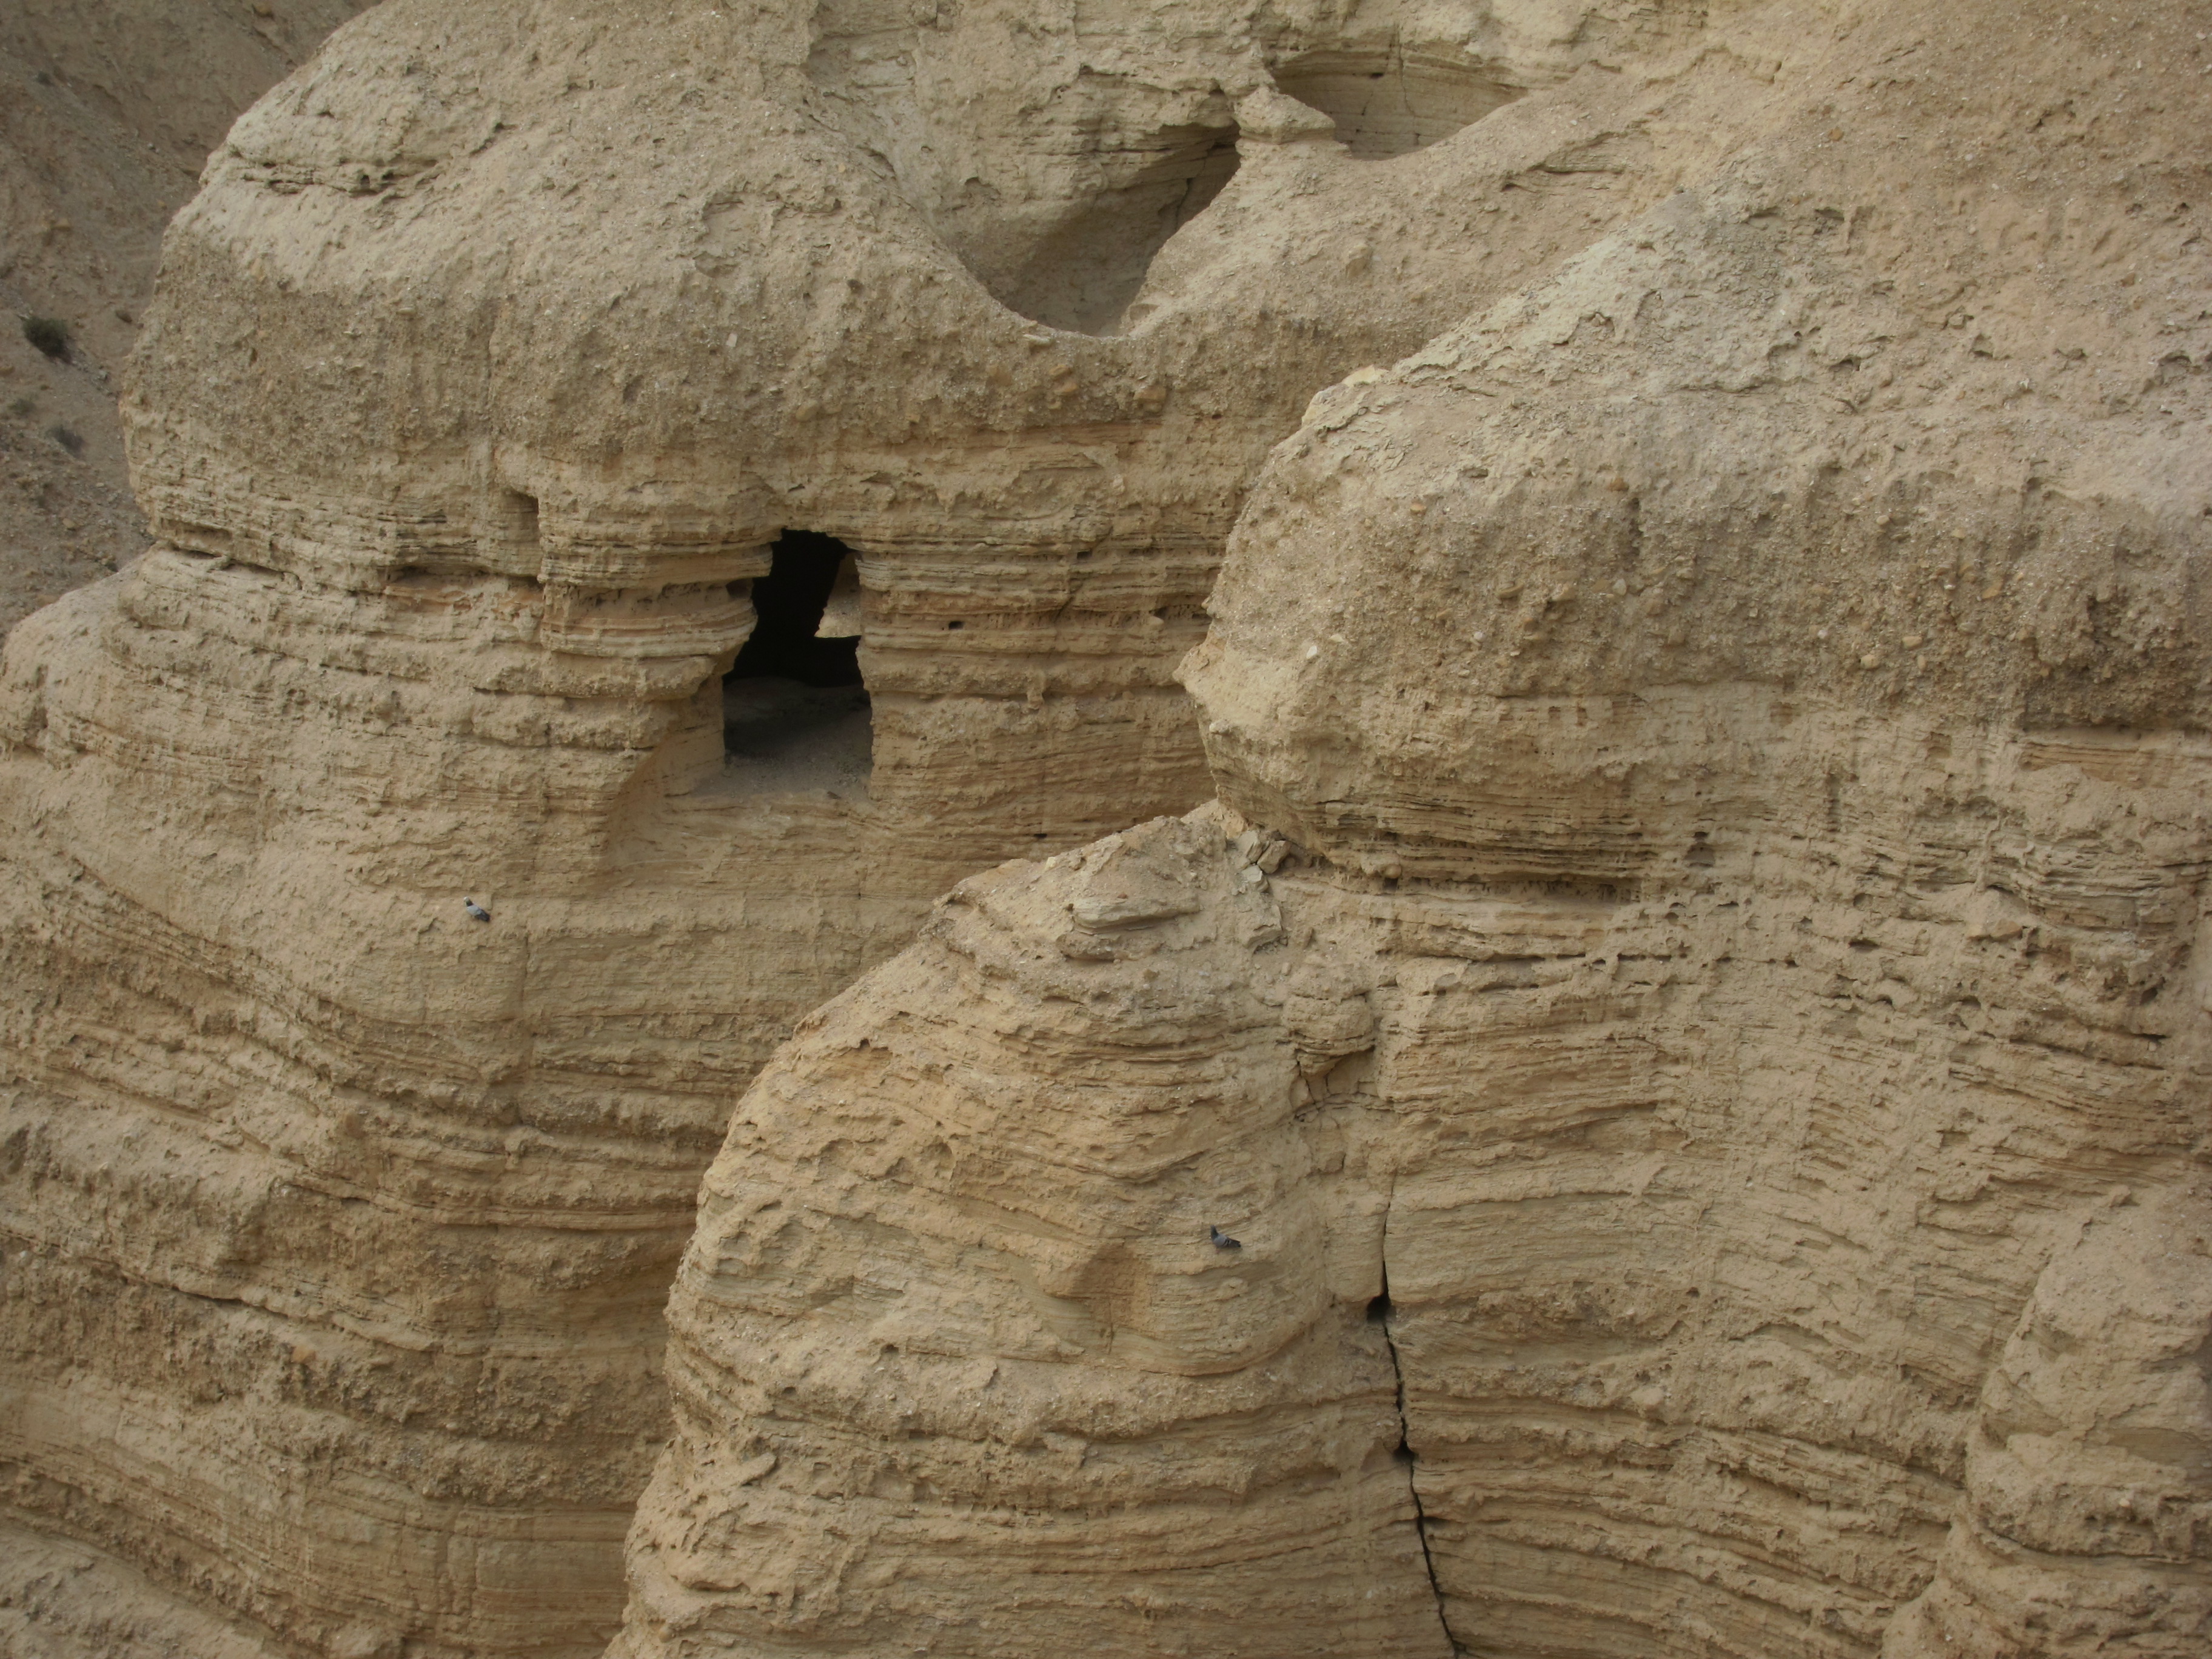 Caves of Qumran, Israel